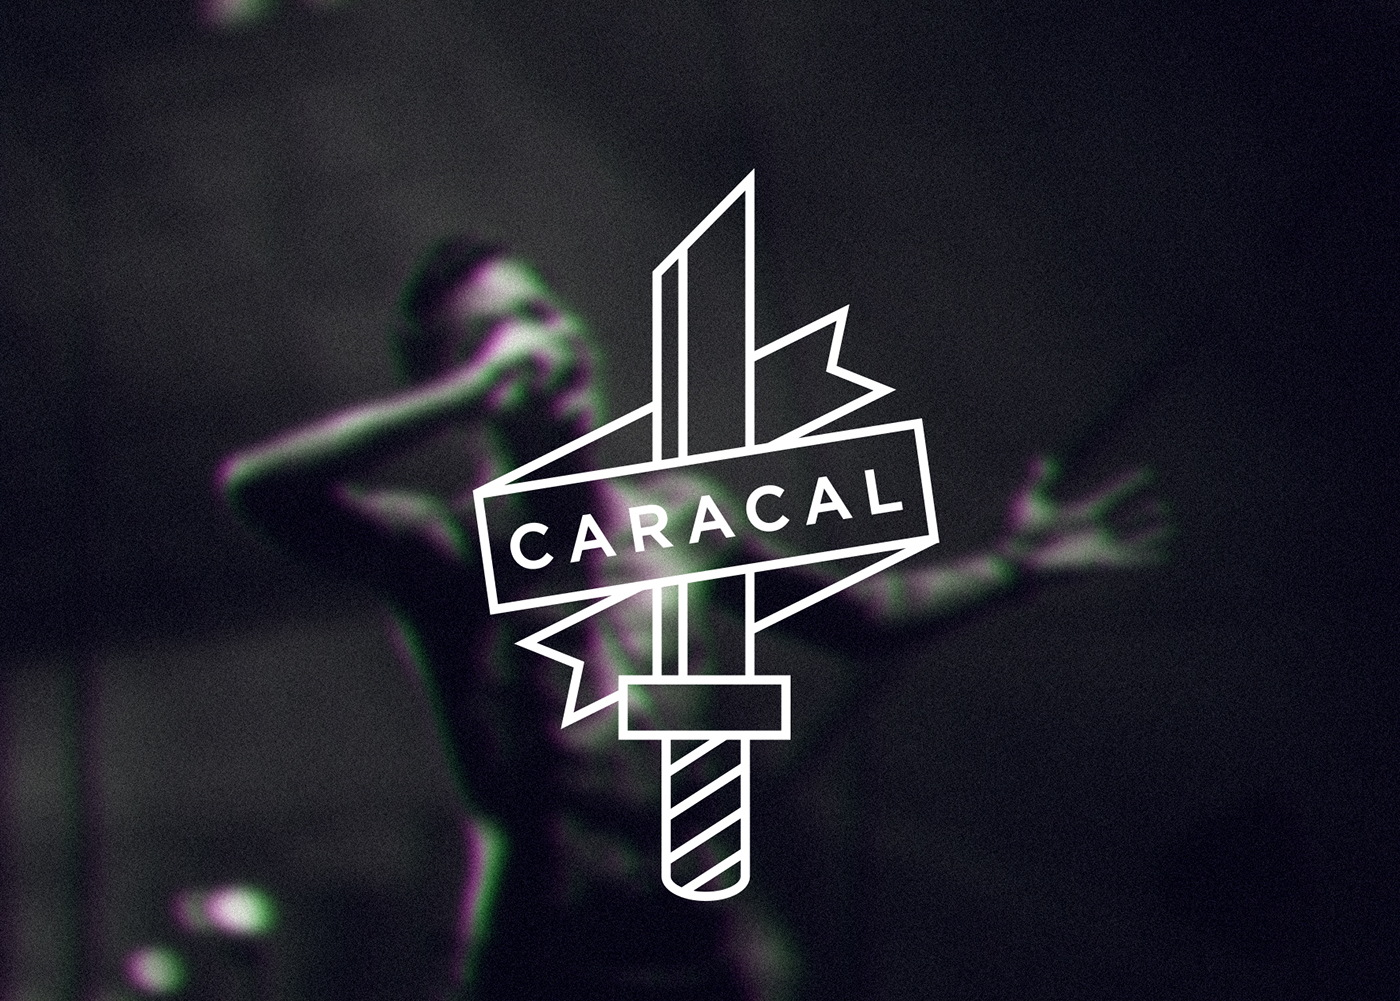 Caracal Album music band logo